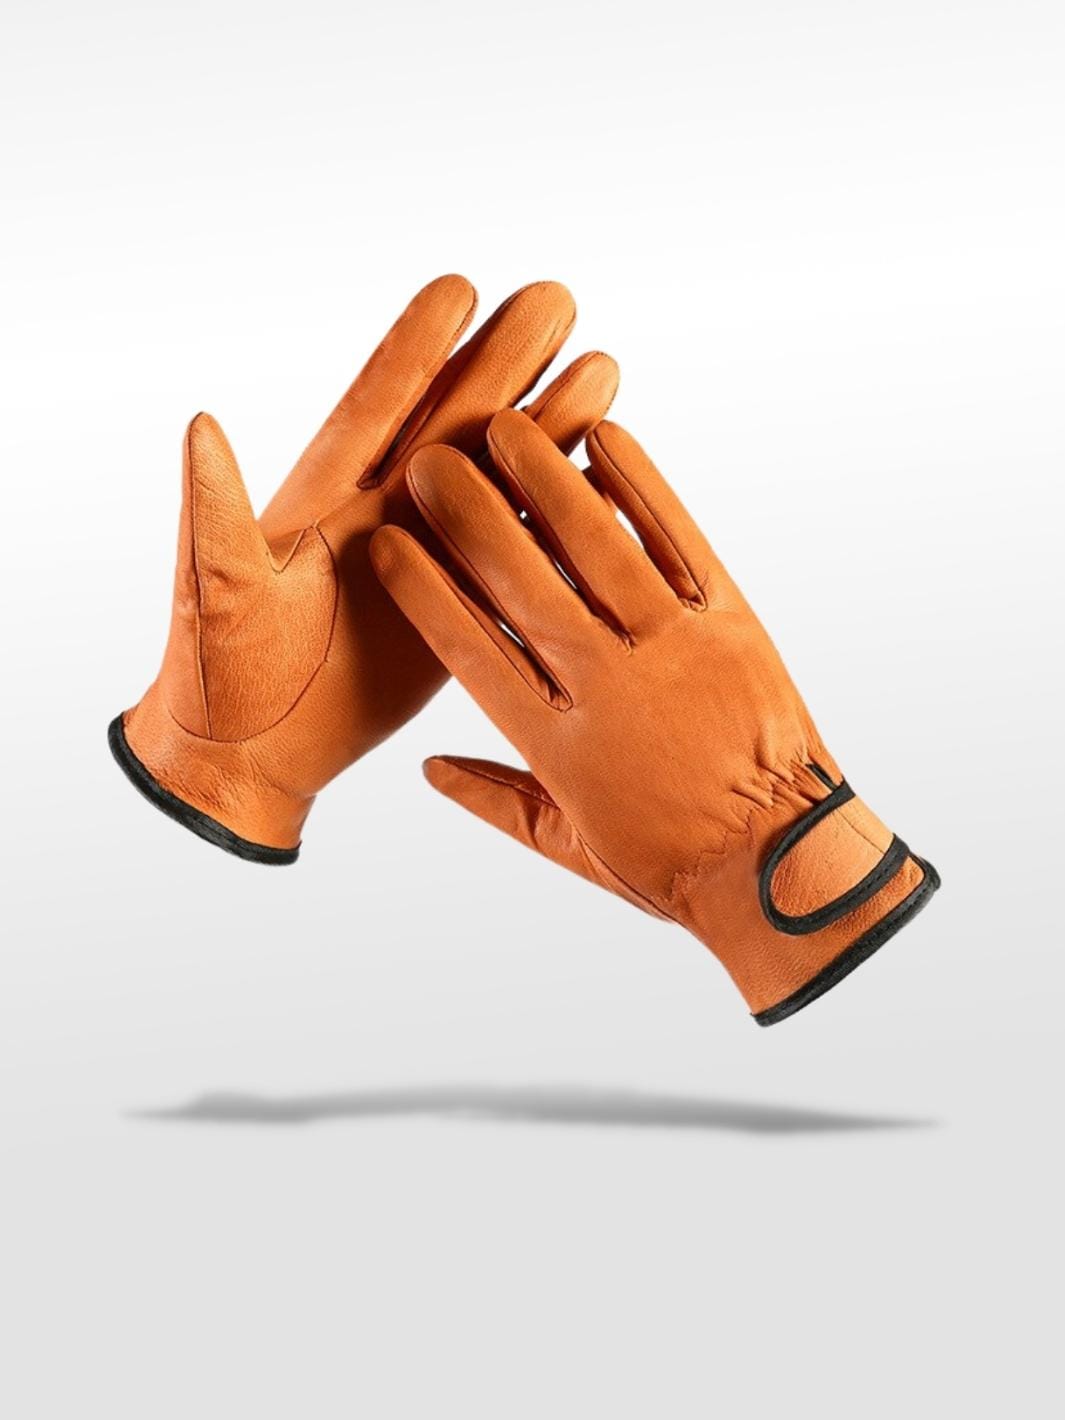 Gant De Travail Cuir Orange / Standard